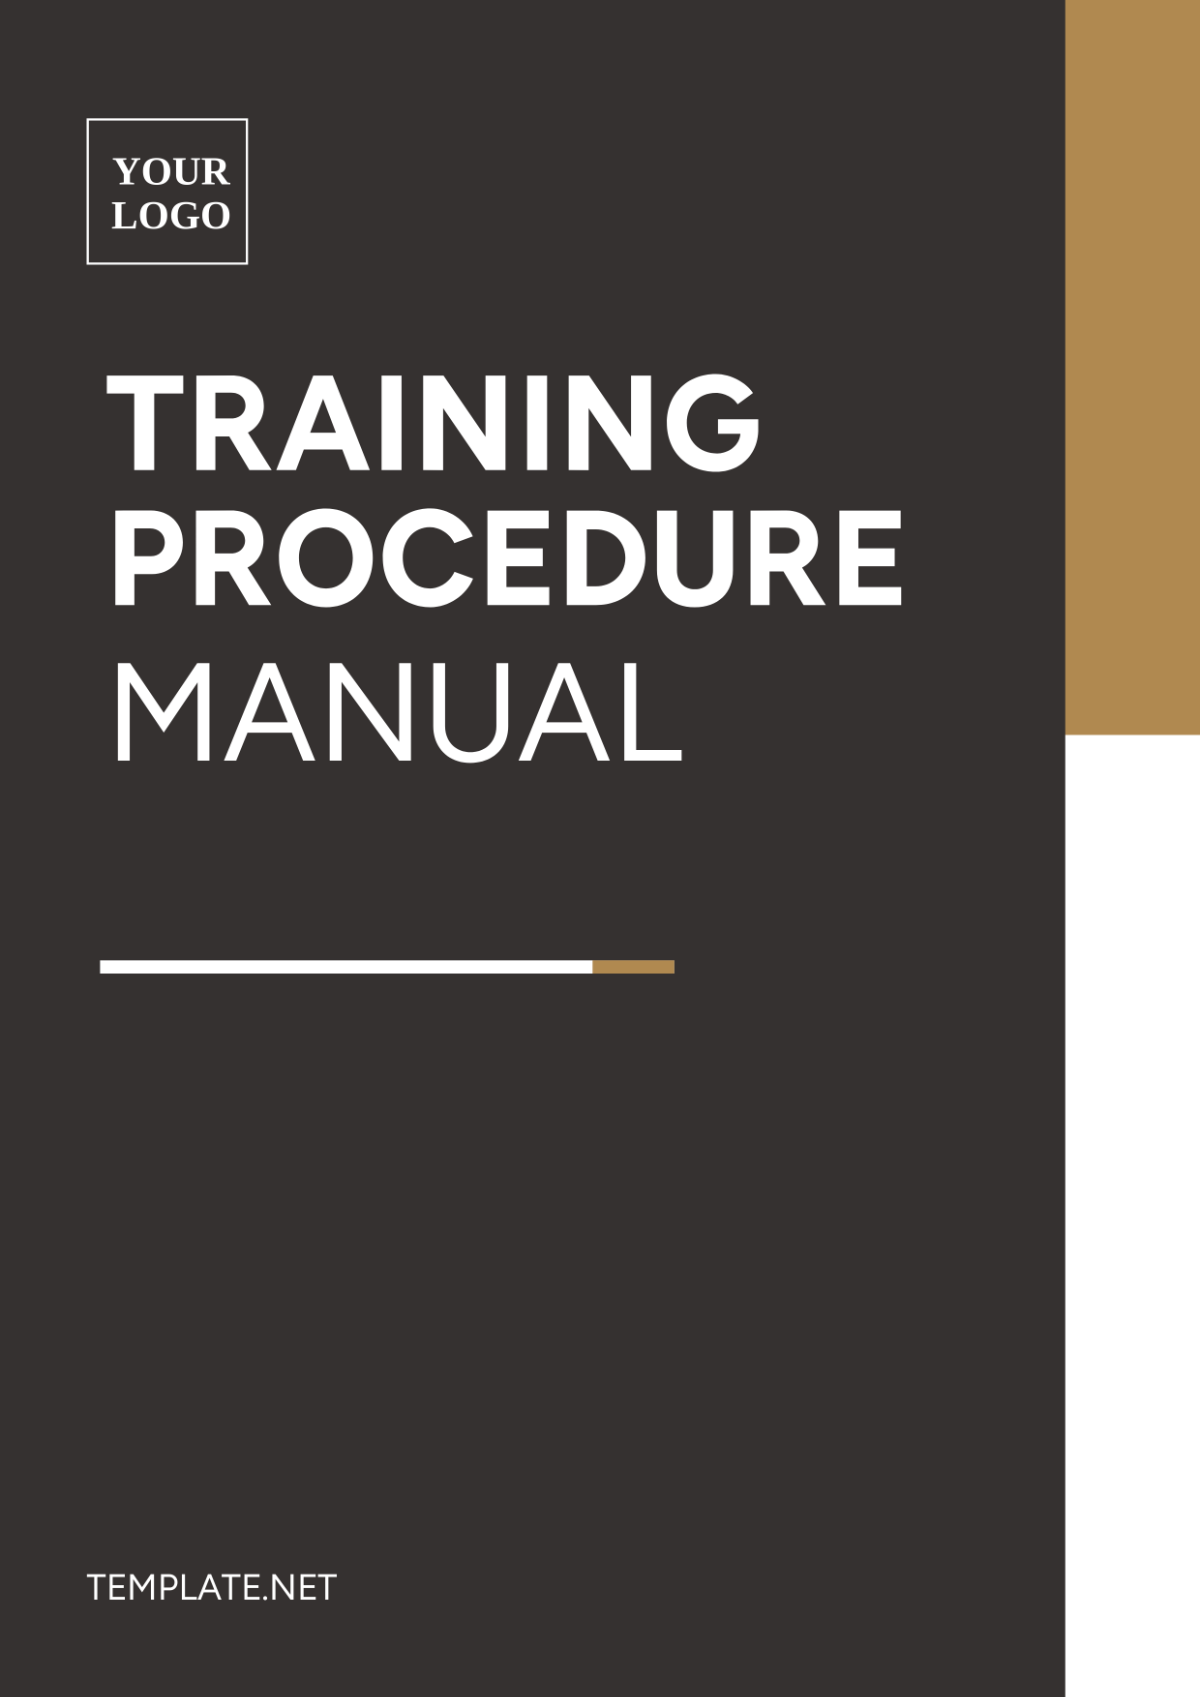 Free Training Procedure Manual Template